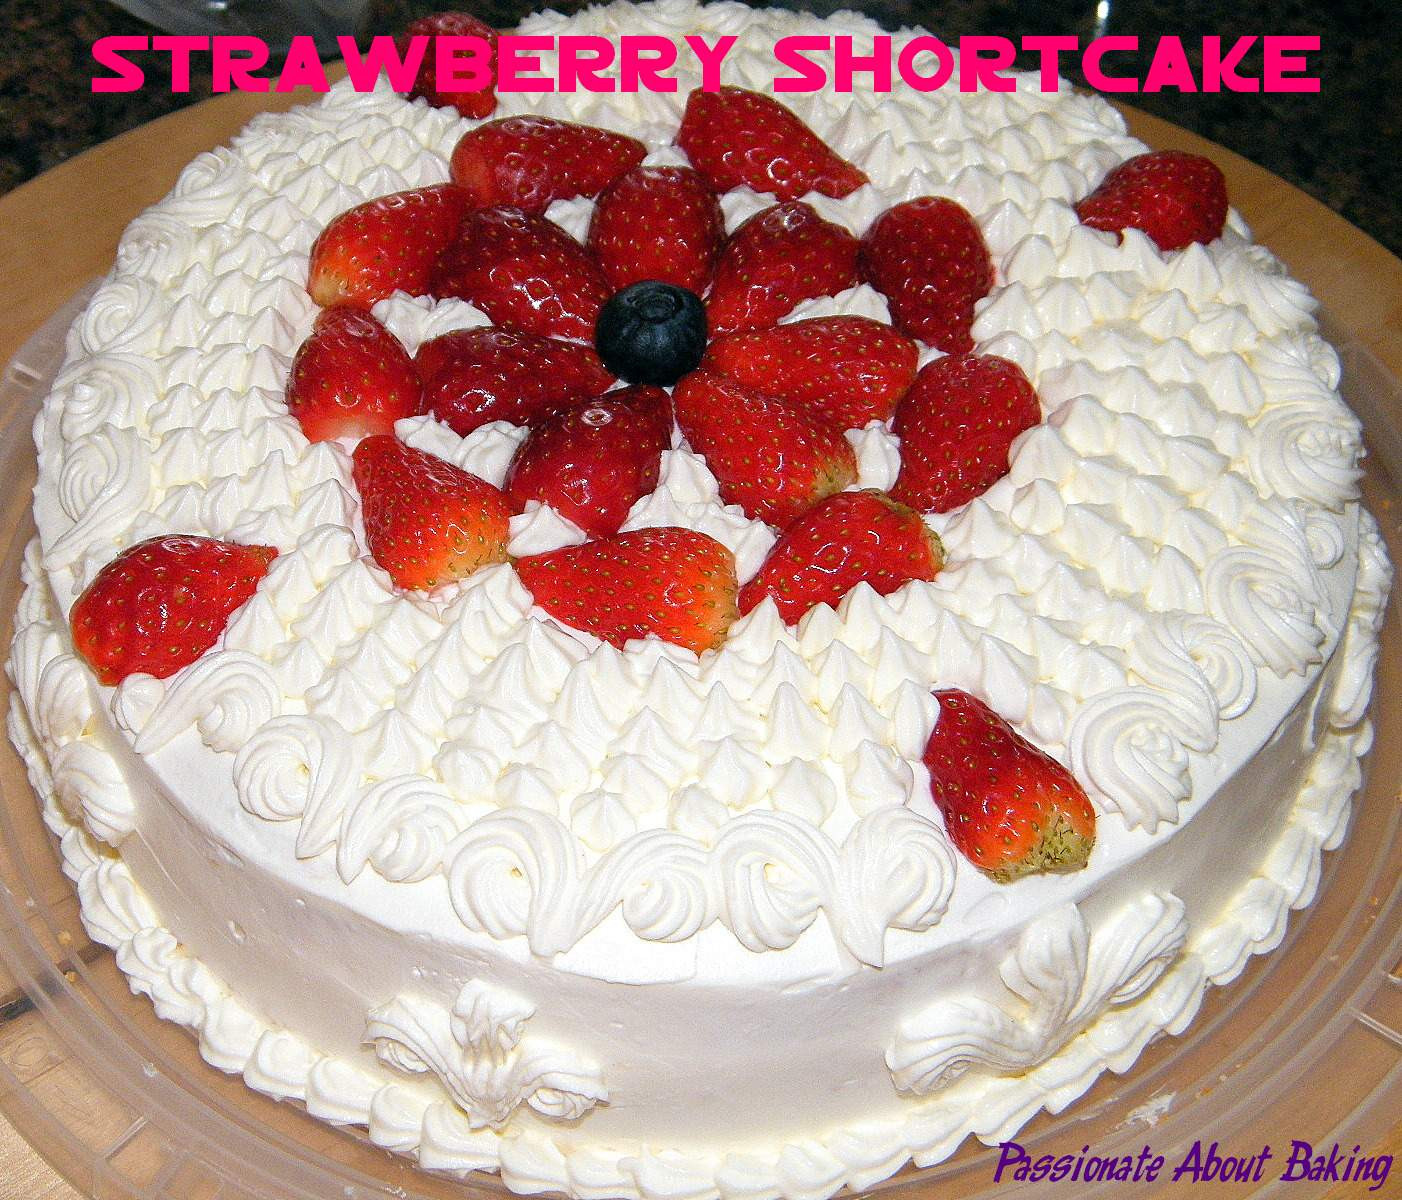 Strawberry Shortcake Birthday Cake Recipes
 A Birthday Strawberry Shortcake